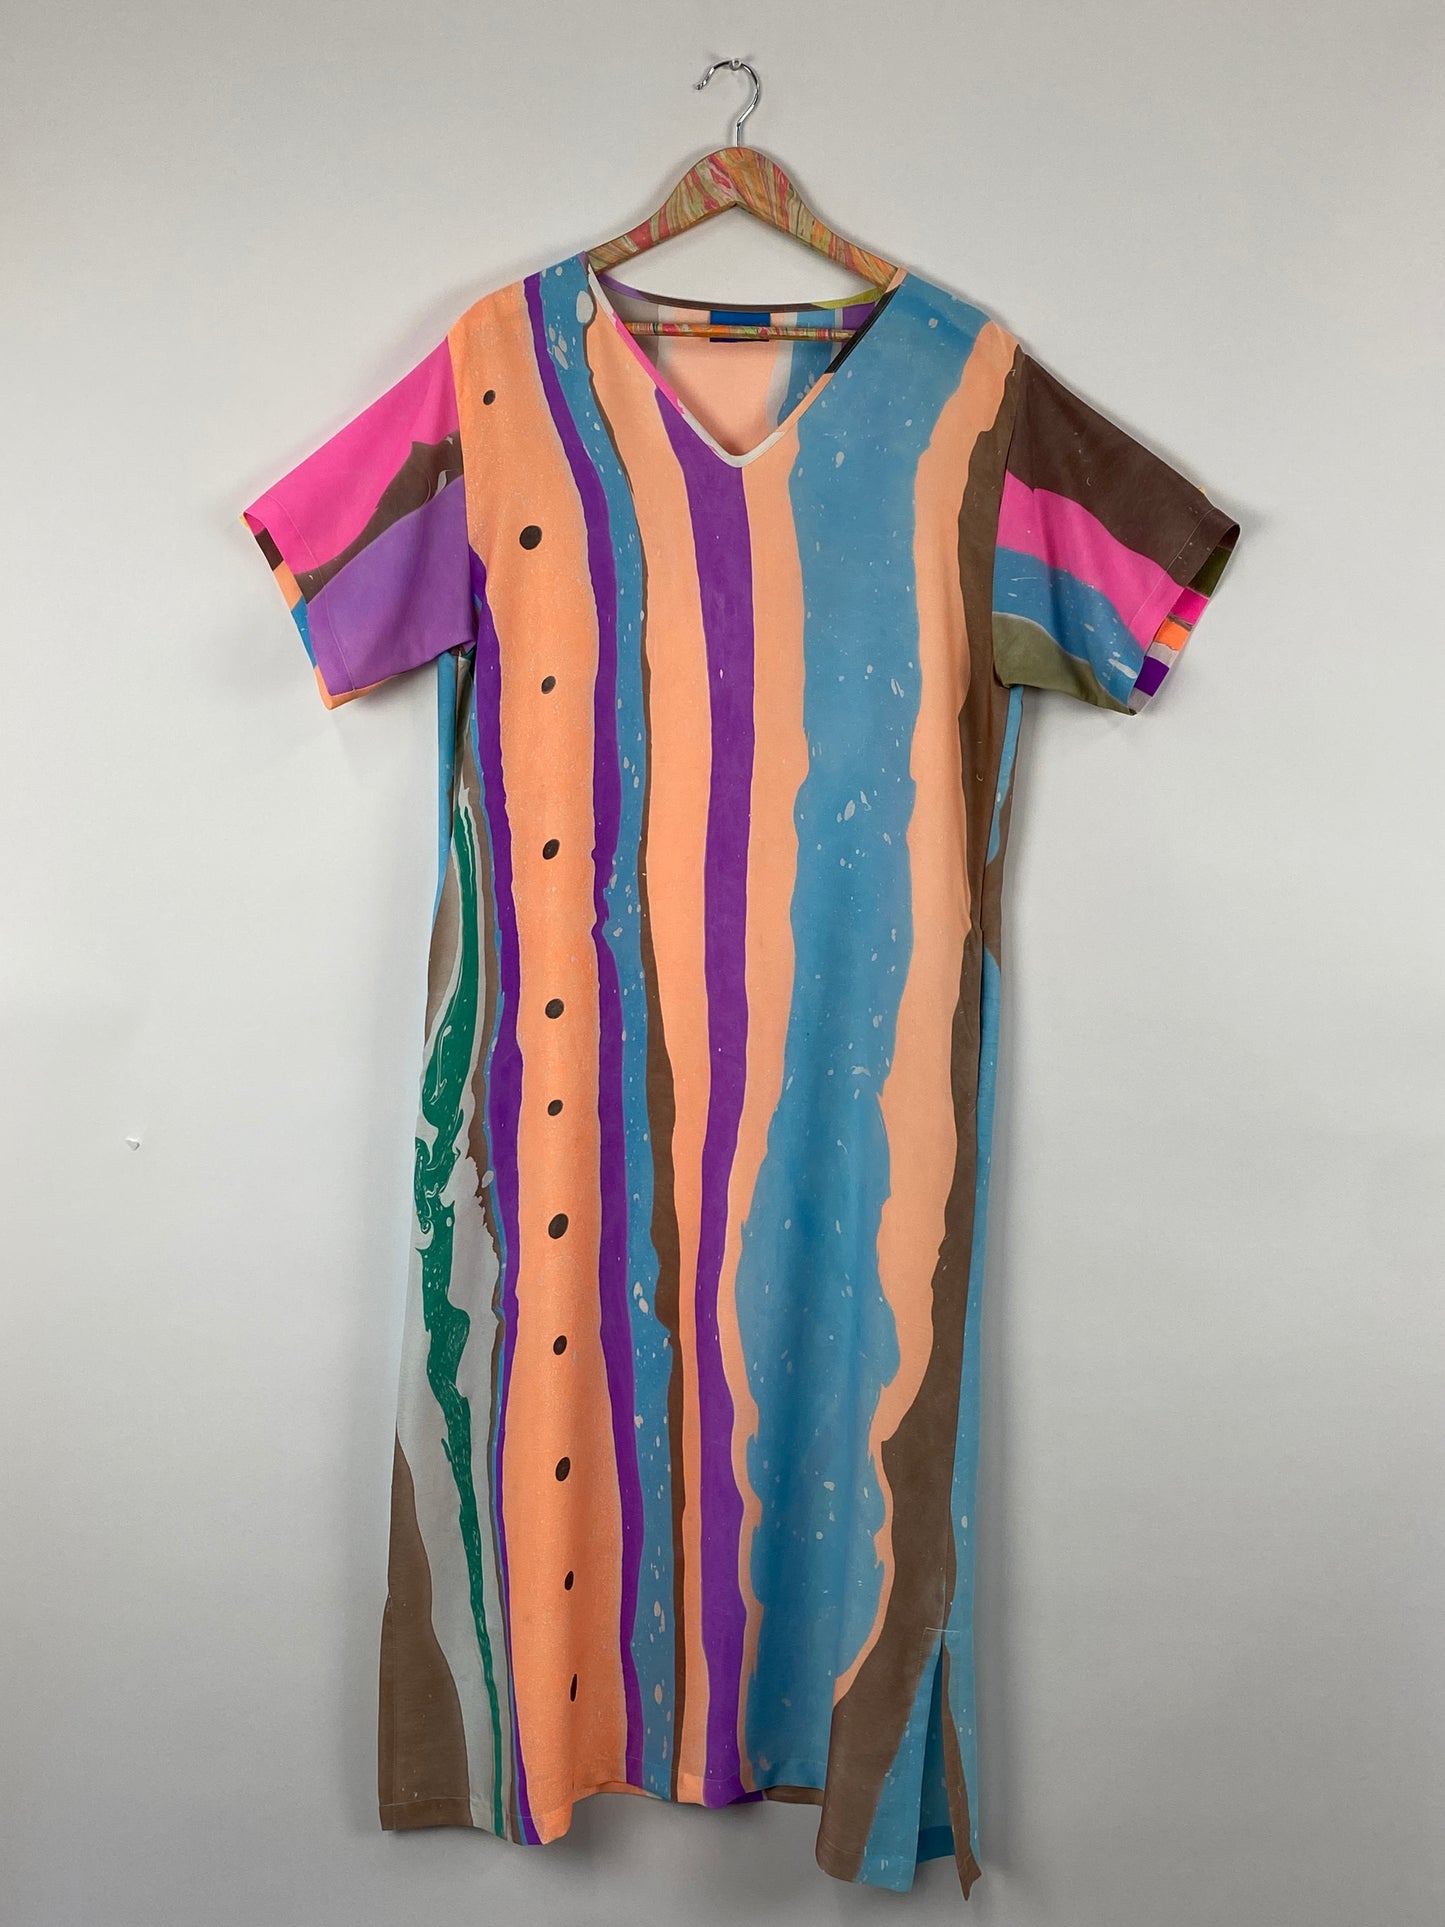 S/M Stripe Dress #6